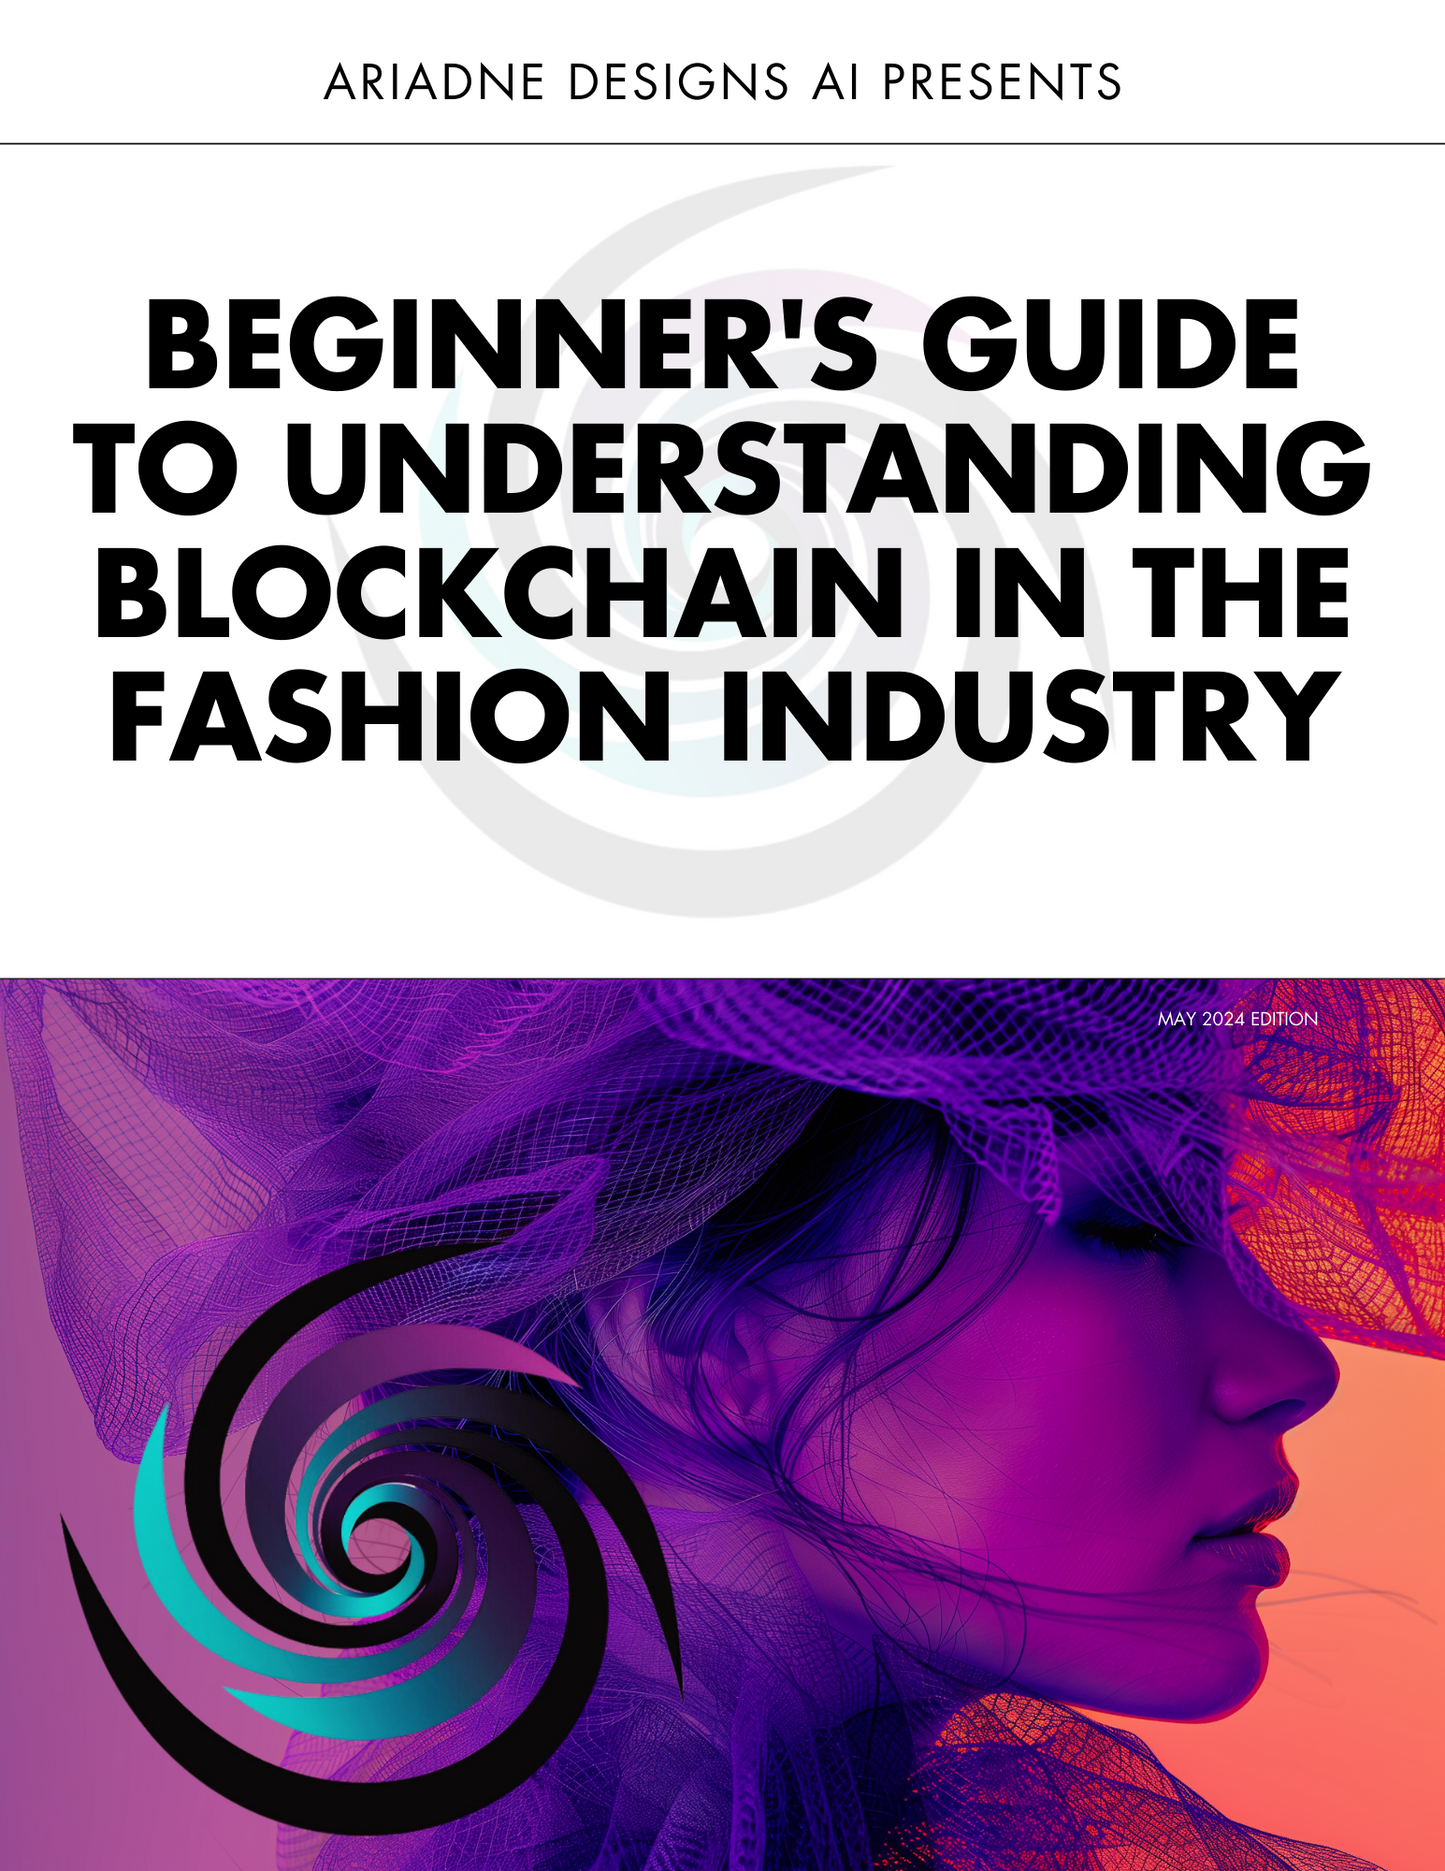 The Beginner's Guide to Blockchain in the Fashion Industry - Ariadne Designs AI